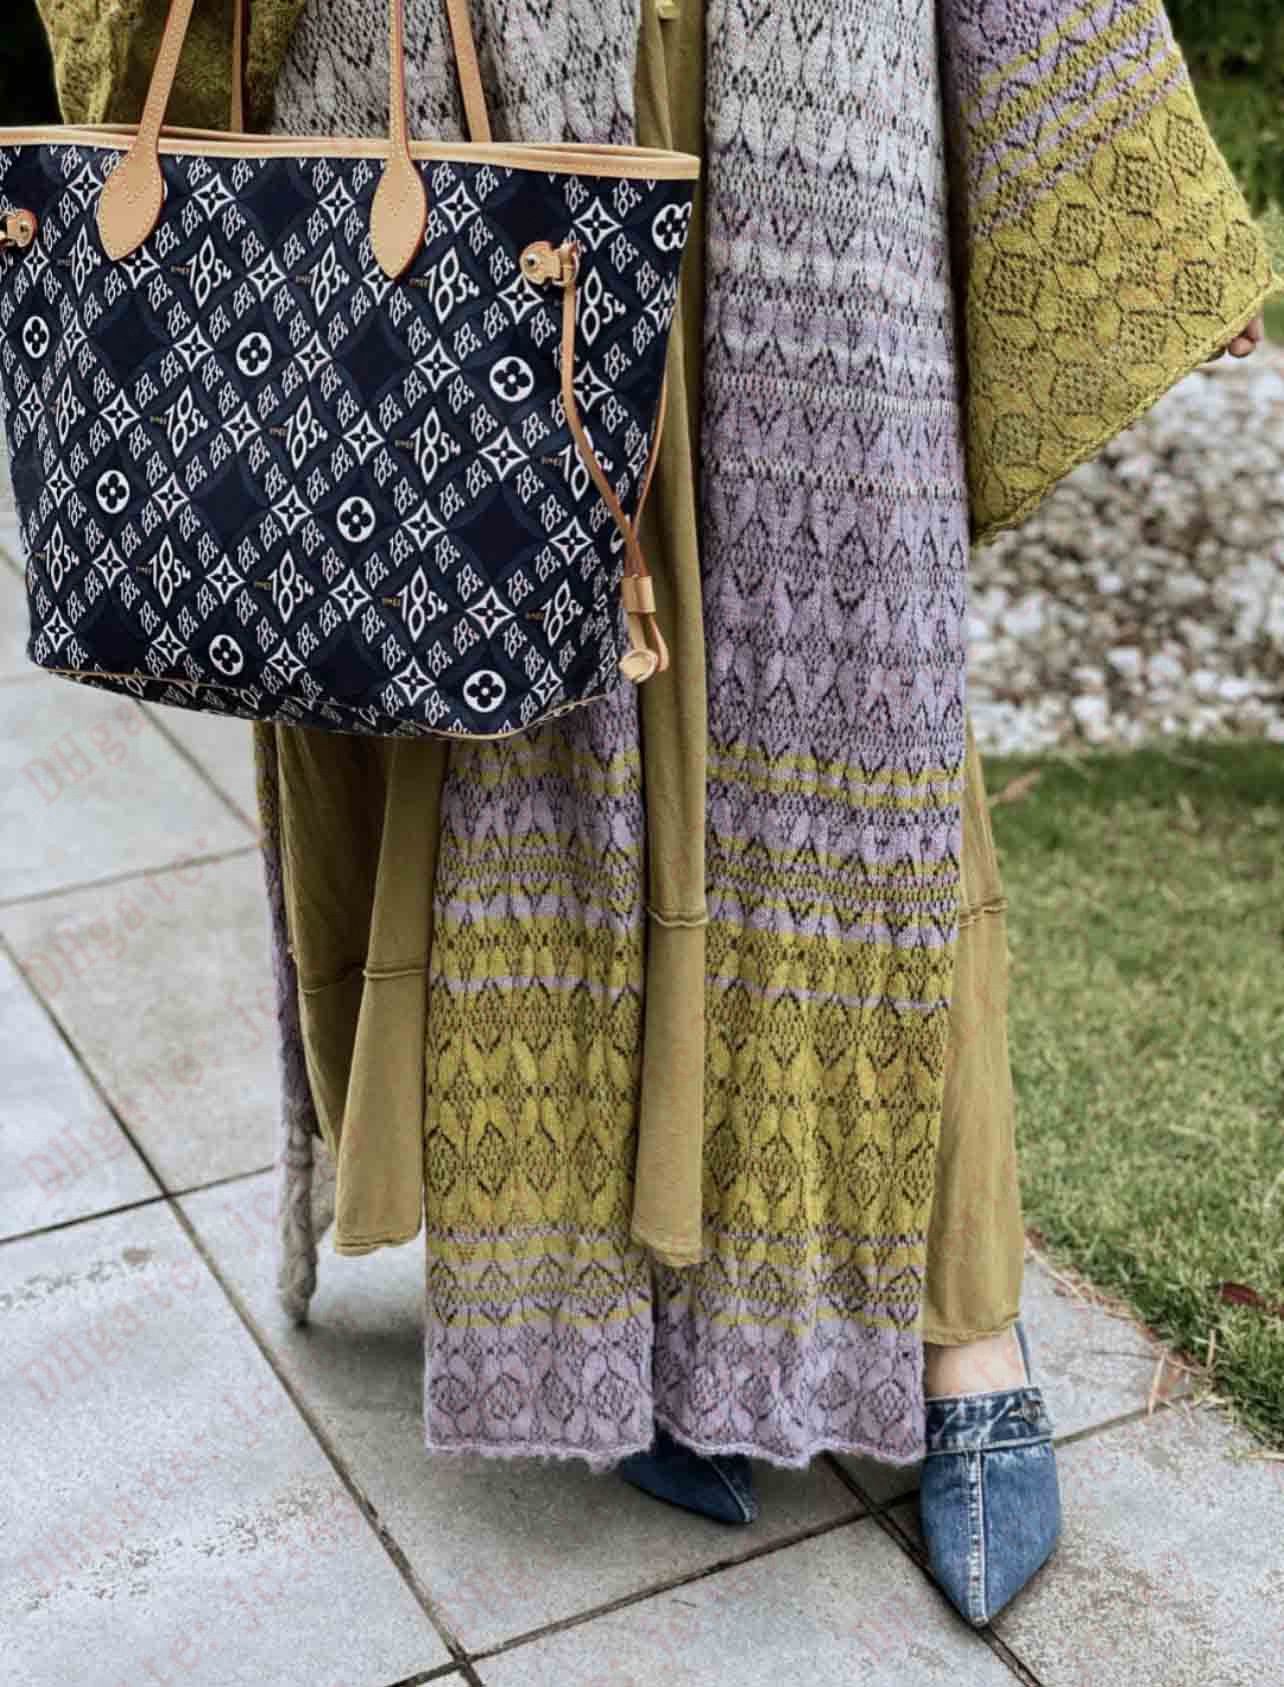 Top Quality Women Bag Fashion Designer Handbag One Shoulder Messenger Purse  1854 Denim Wallet Classic Shopping Tote Bags Set From Jc369, $199.86